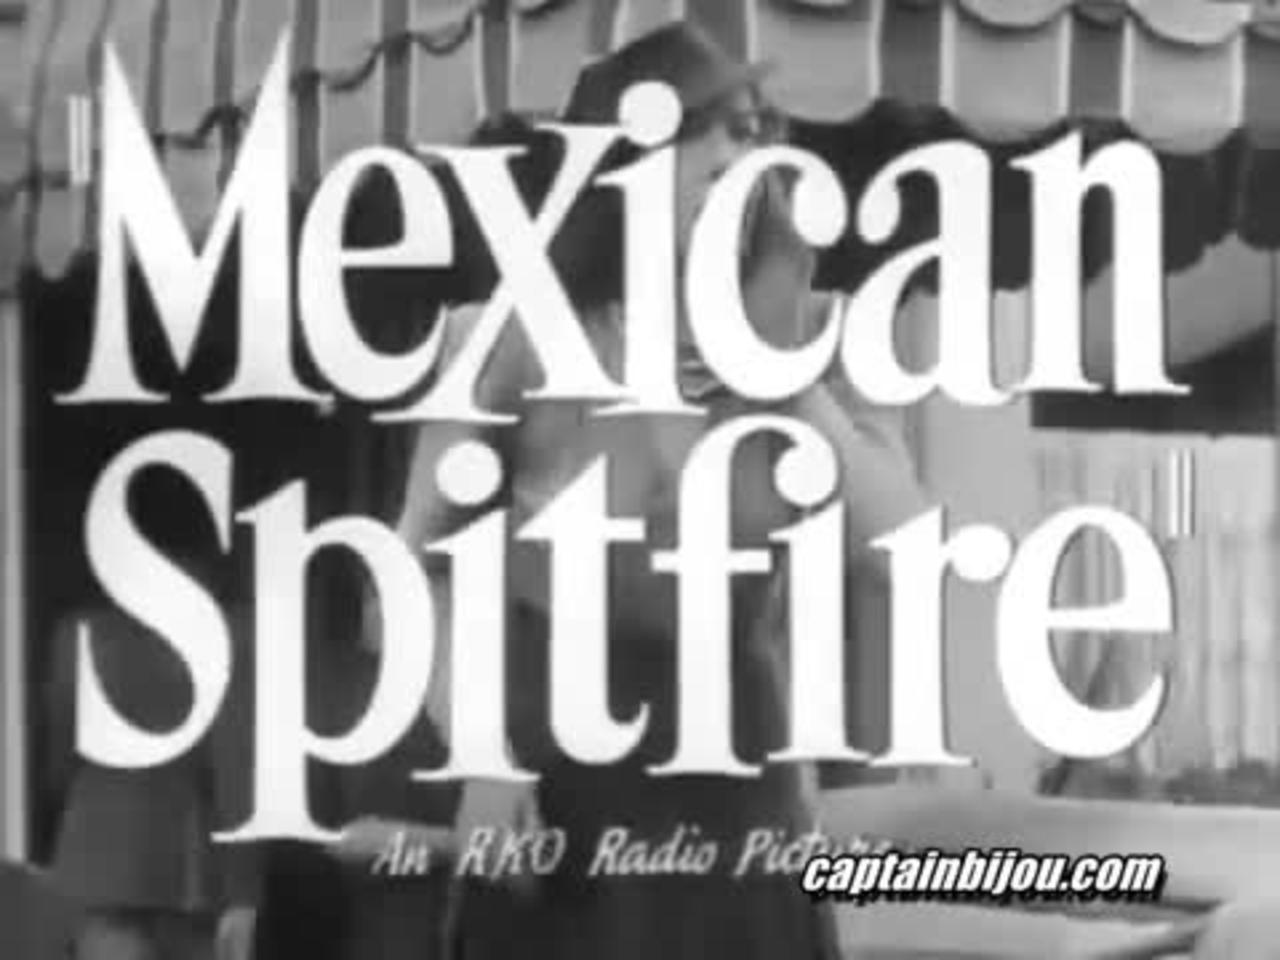 Mexican Spitfire /// 1940 American comedy film trailer